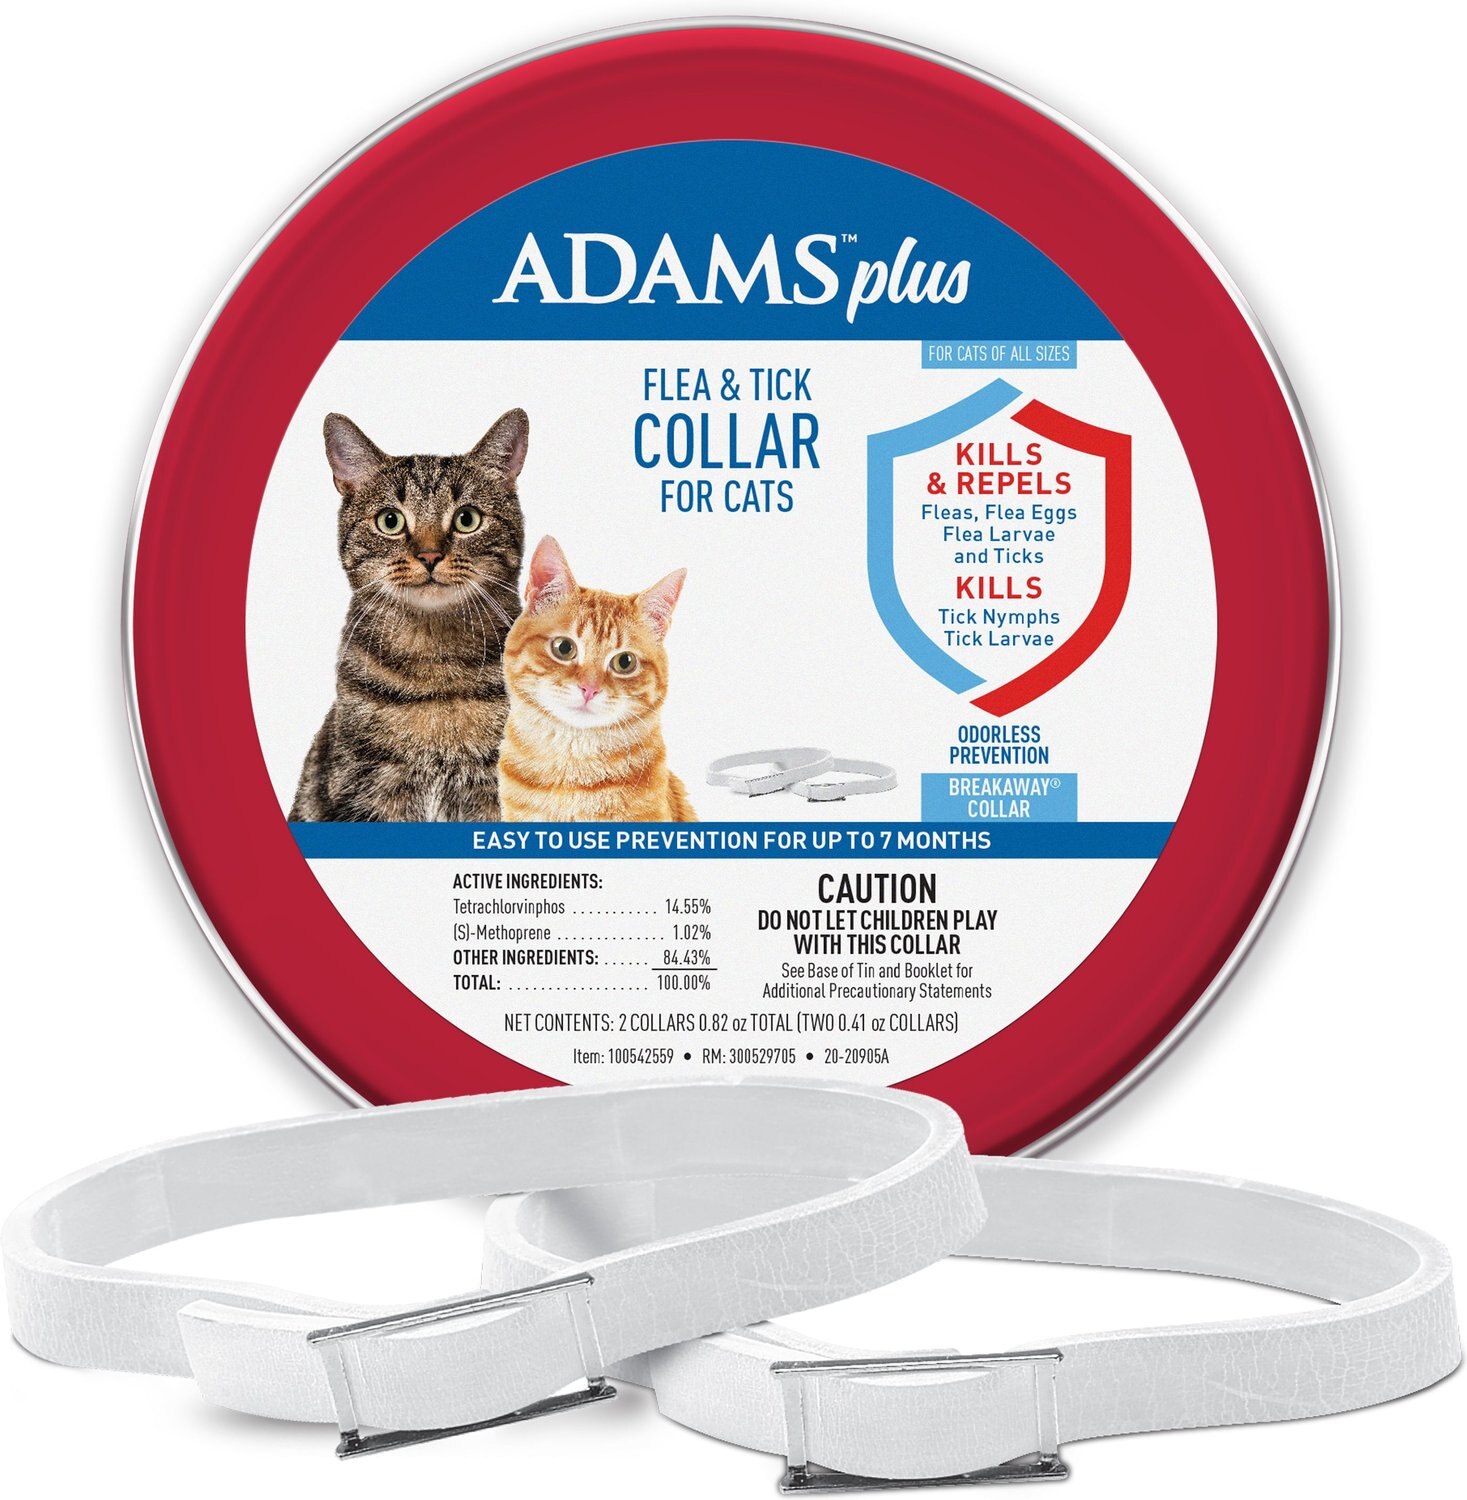 ADAMS Plus Flea & Tick Collar for Cats, 2 count